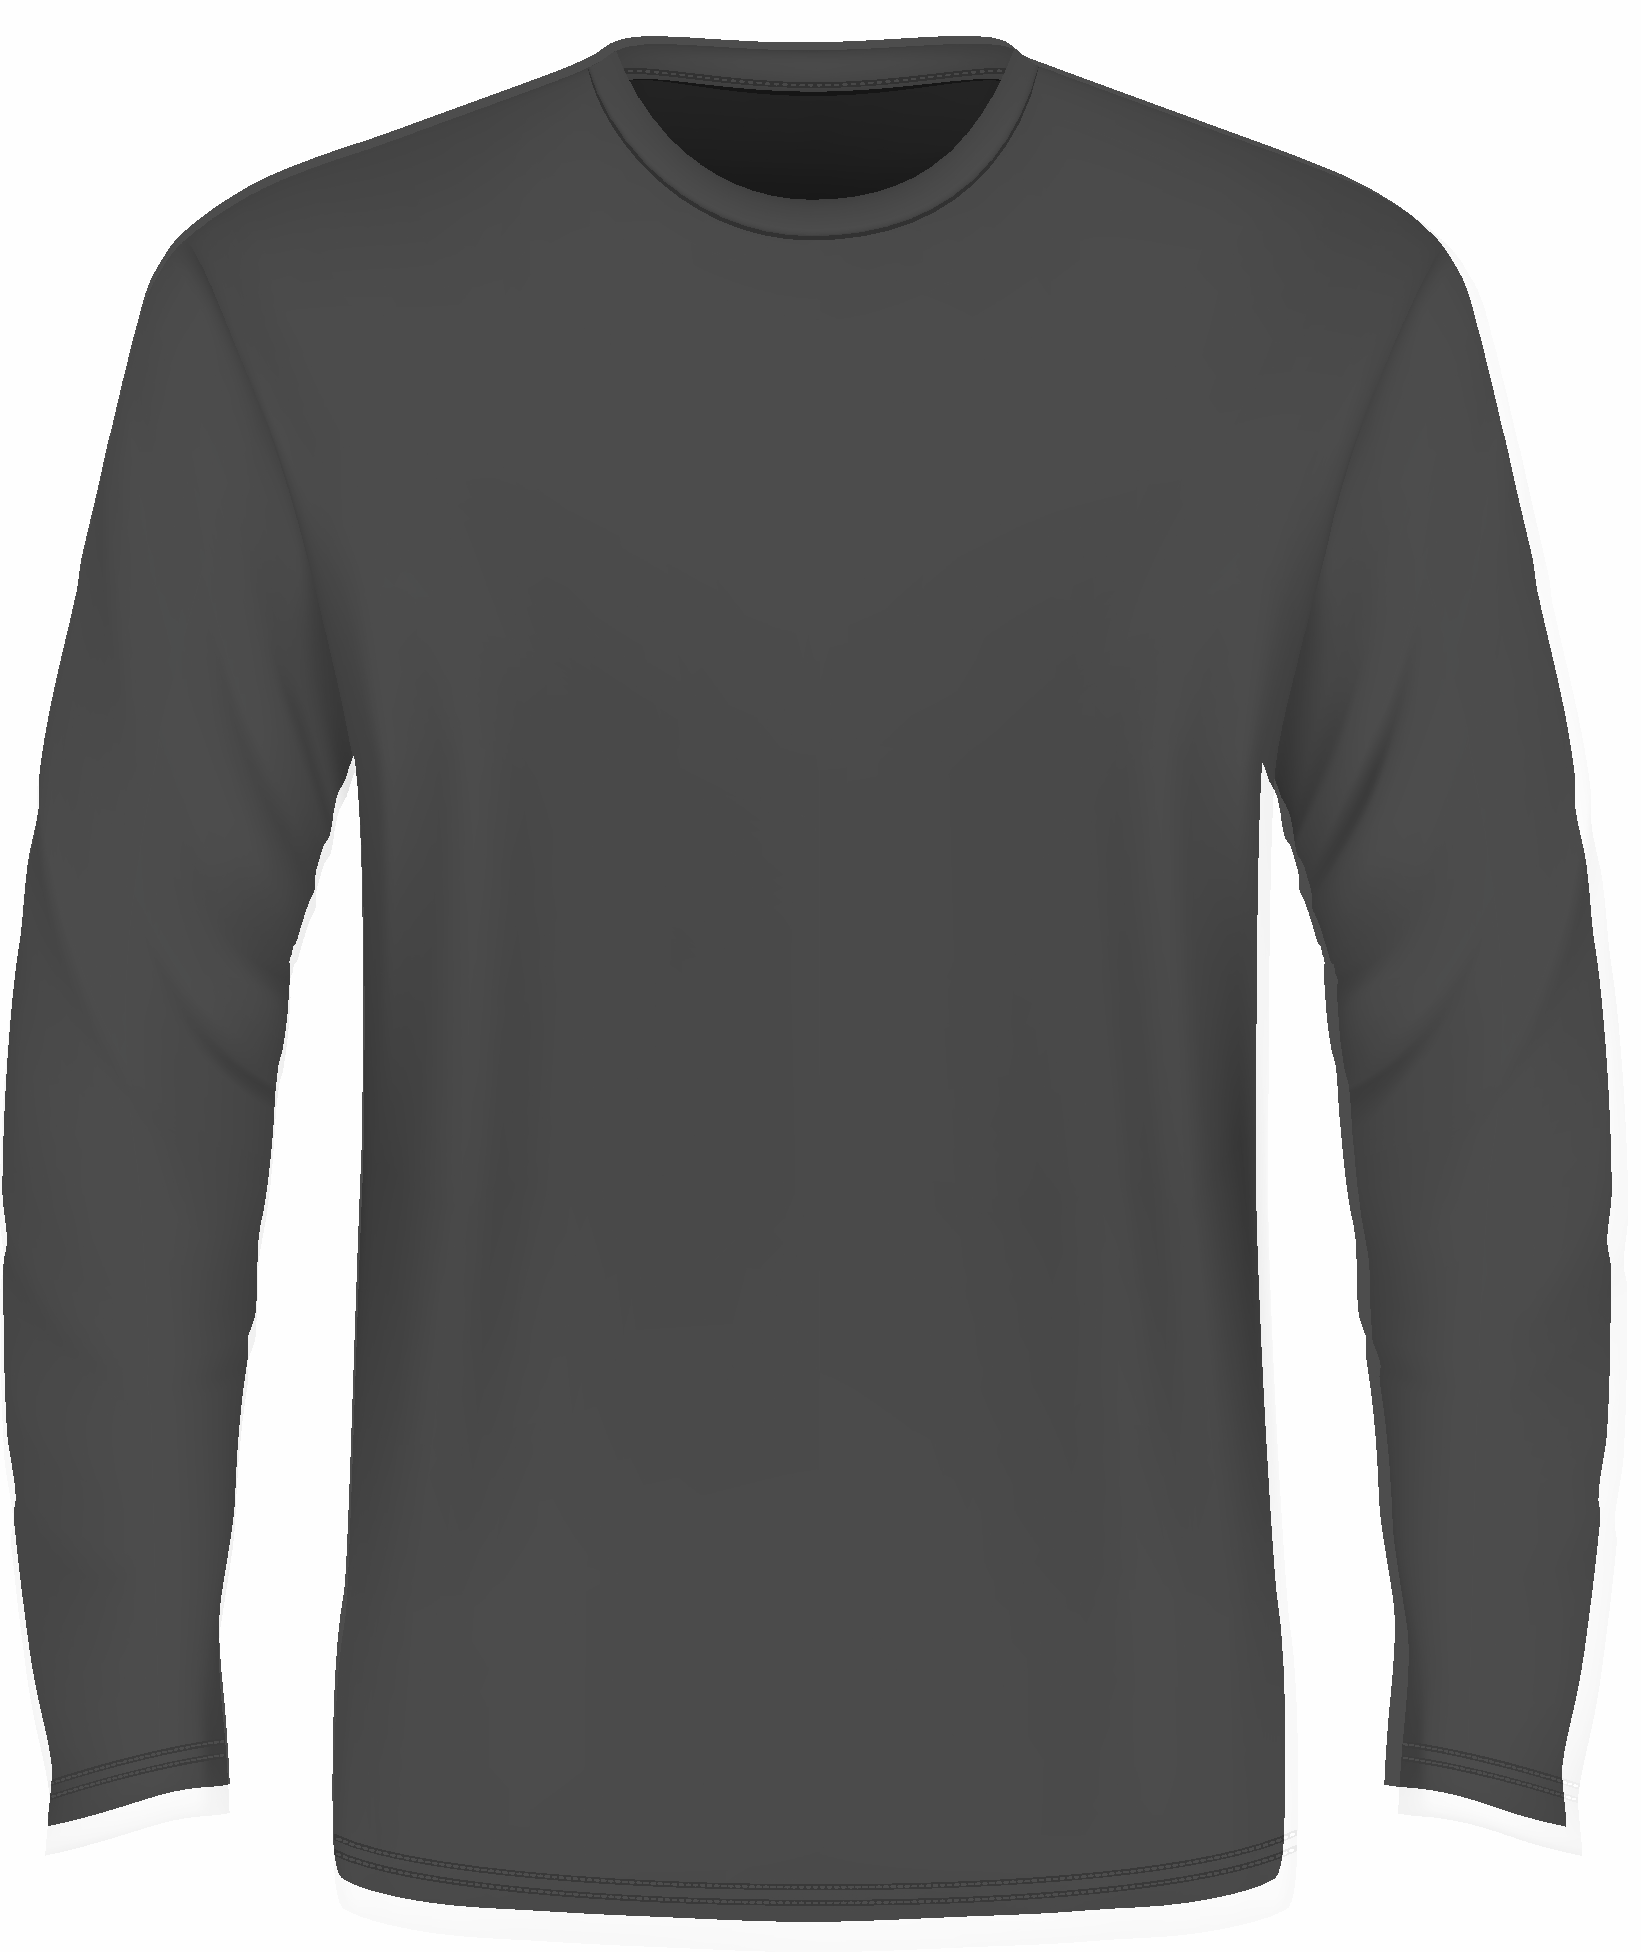 Long Sleeve Crew Neck T-Shirt Transparent Background